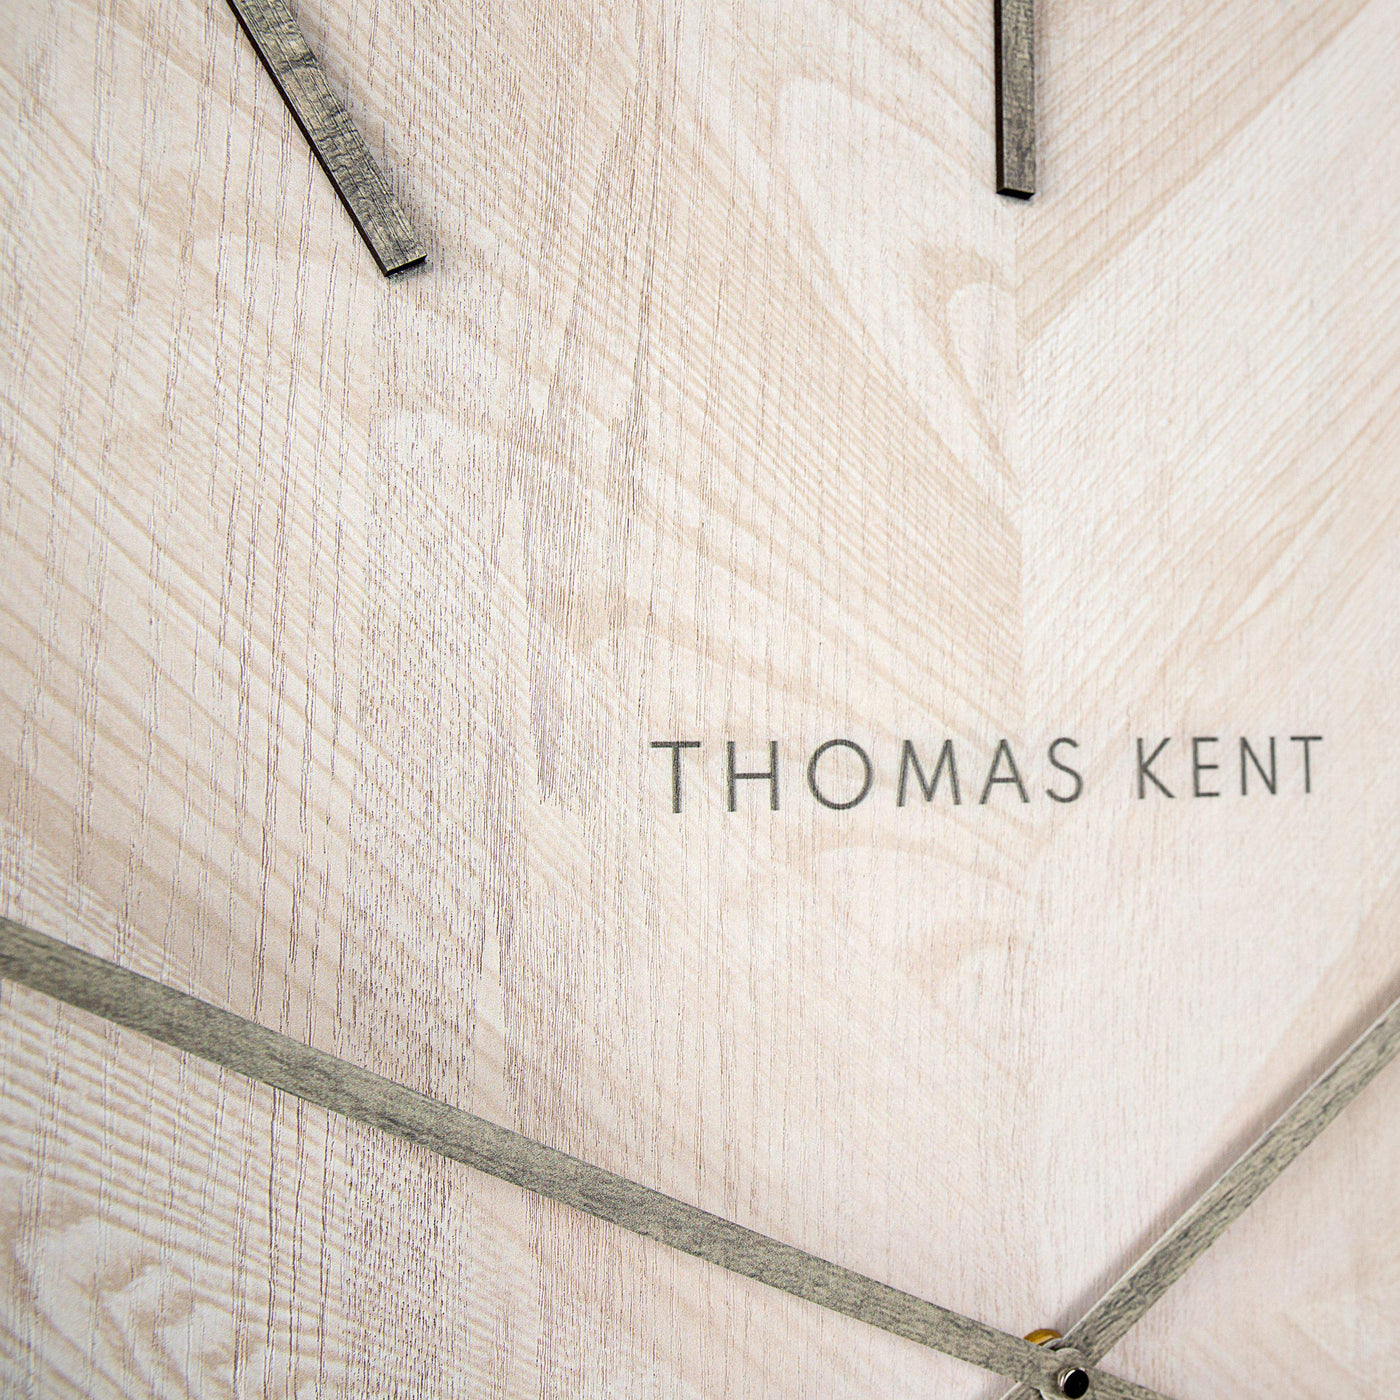 Thomas Kent London. Wharf Herringbone Wall Clock *NEW* - timeframedclocks